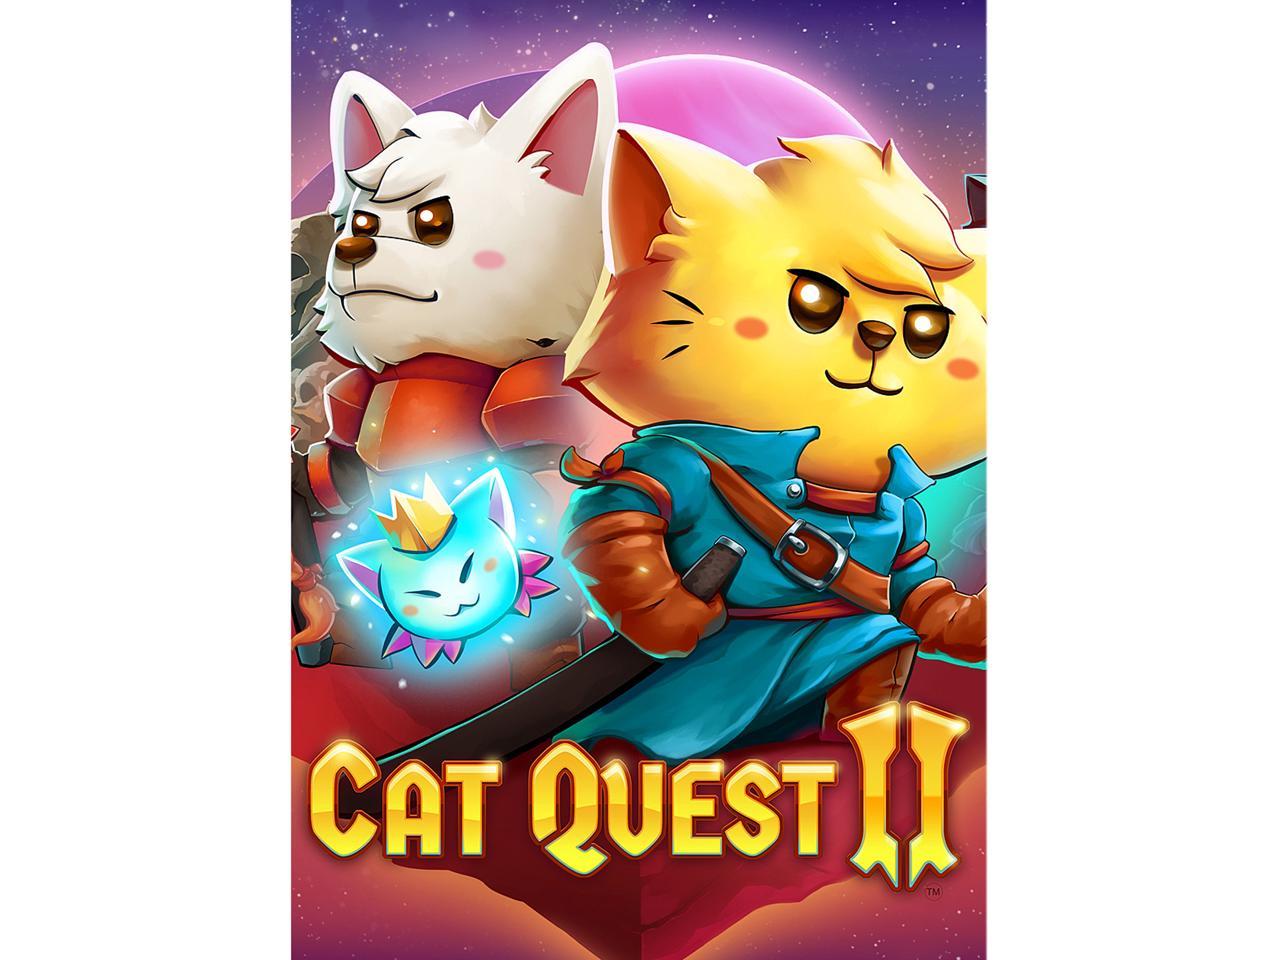 cat quest ii review